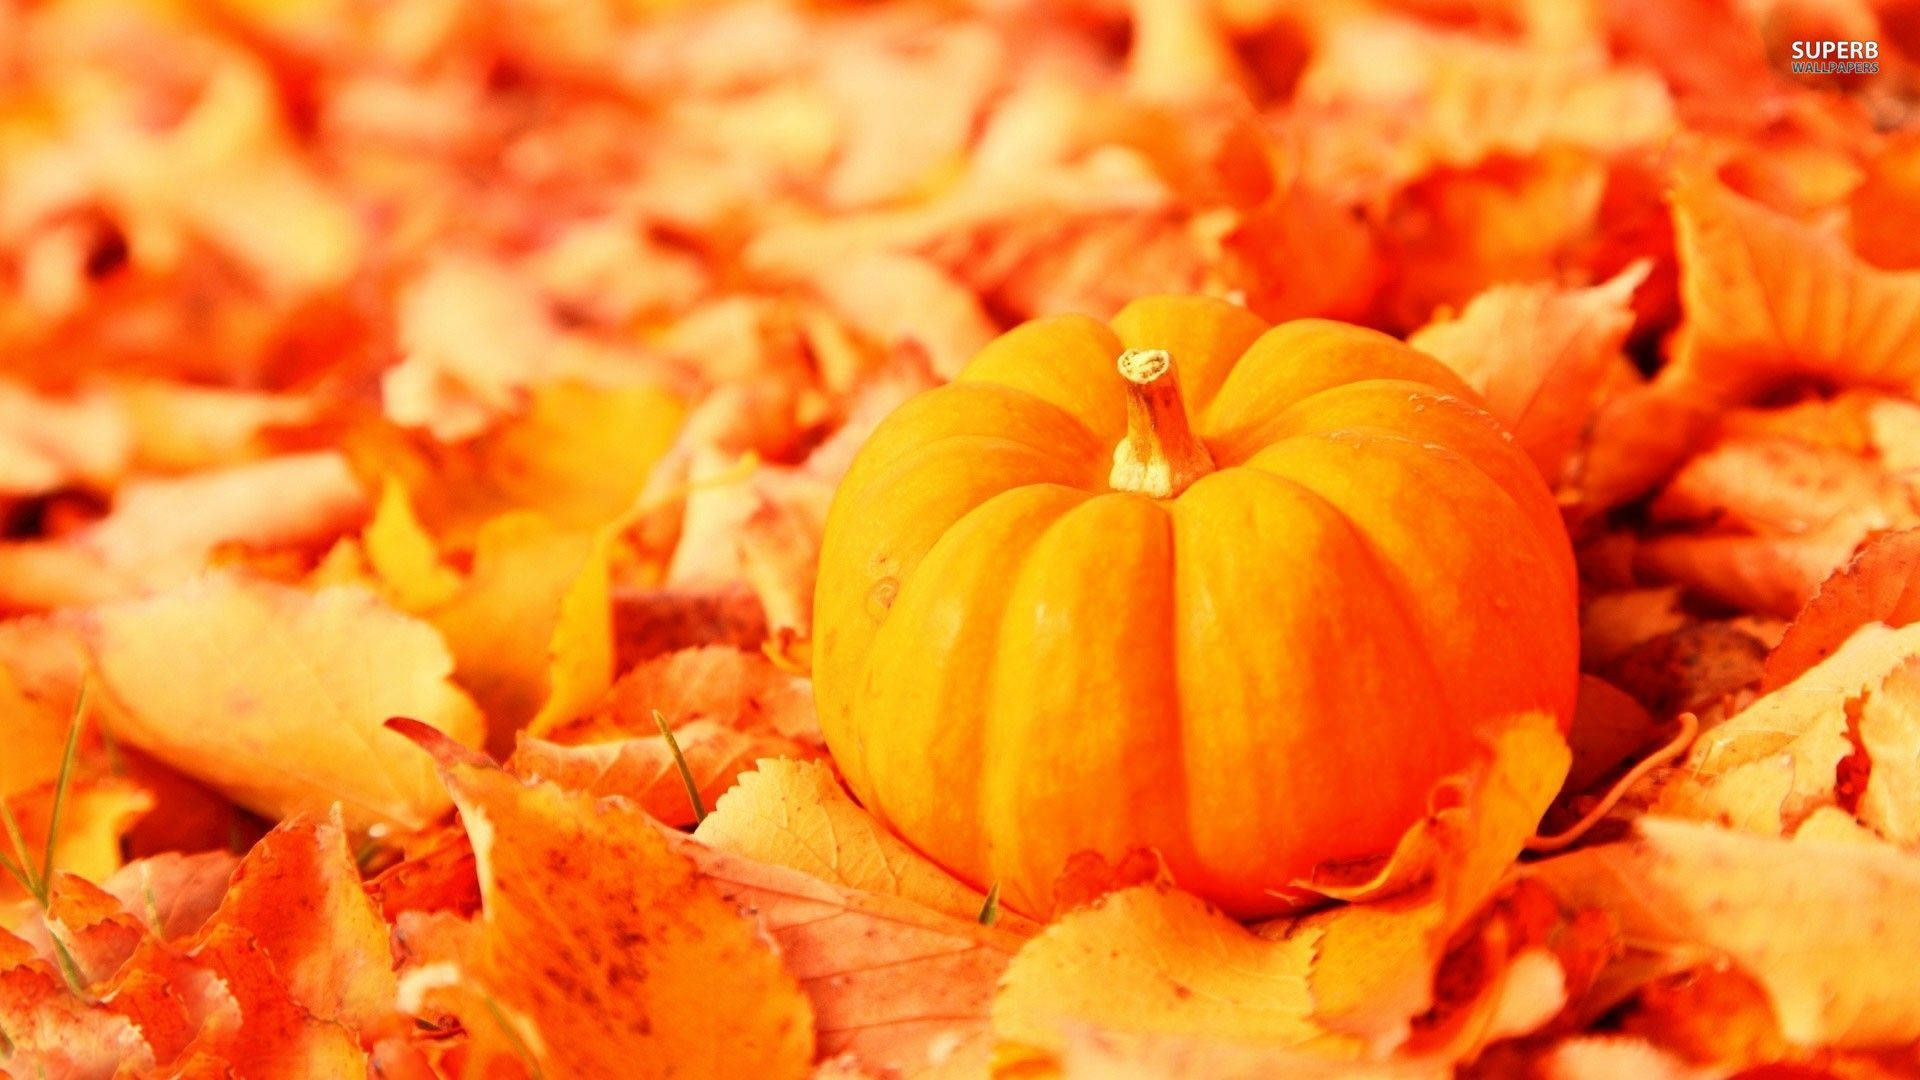 Brightening up the Autumn, a Pumpkin Glows in the Sunlight Wallpaper